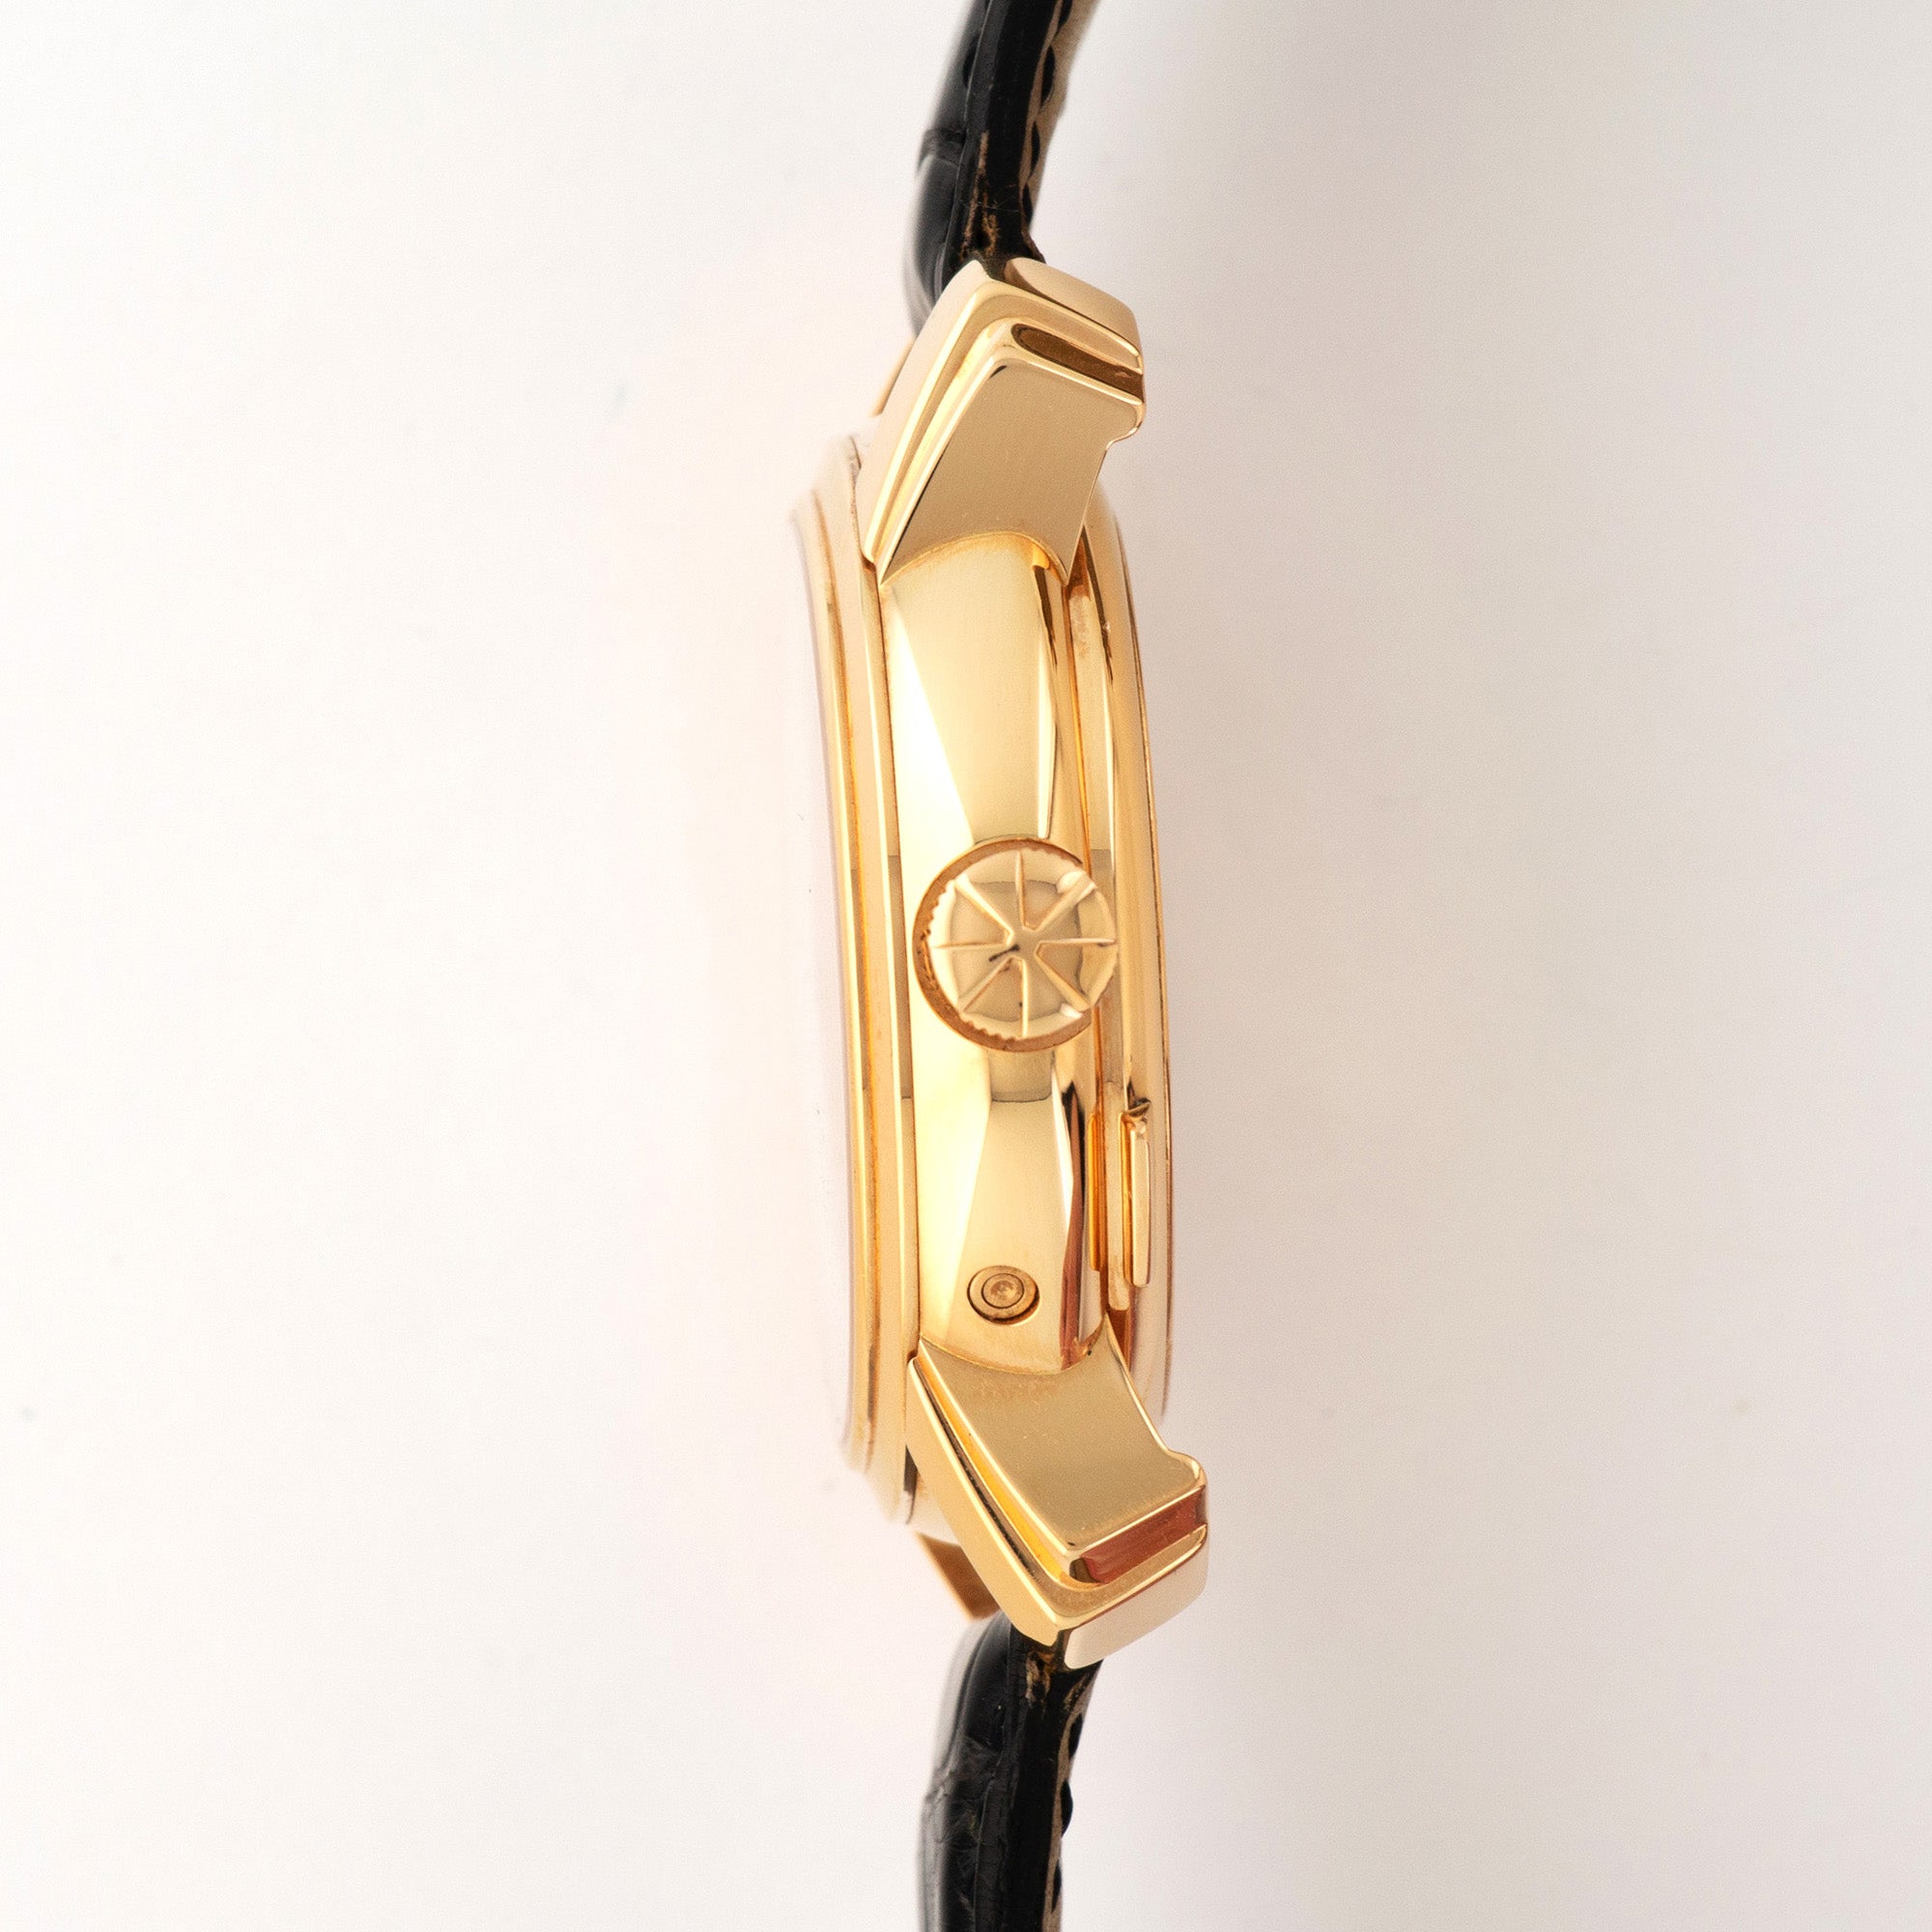 Vacheron Constantin - Vacheron Constantin Rose Gold 31 Day Retrograde Perpetual Calendar Watch - The Keystone Watches